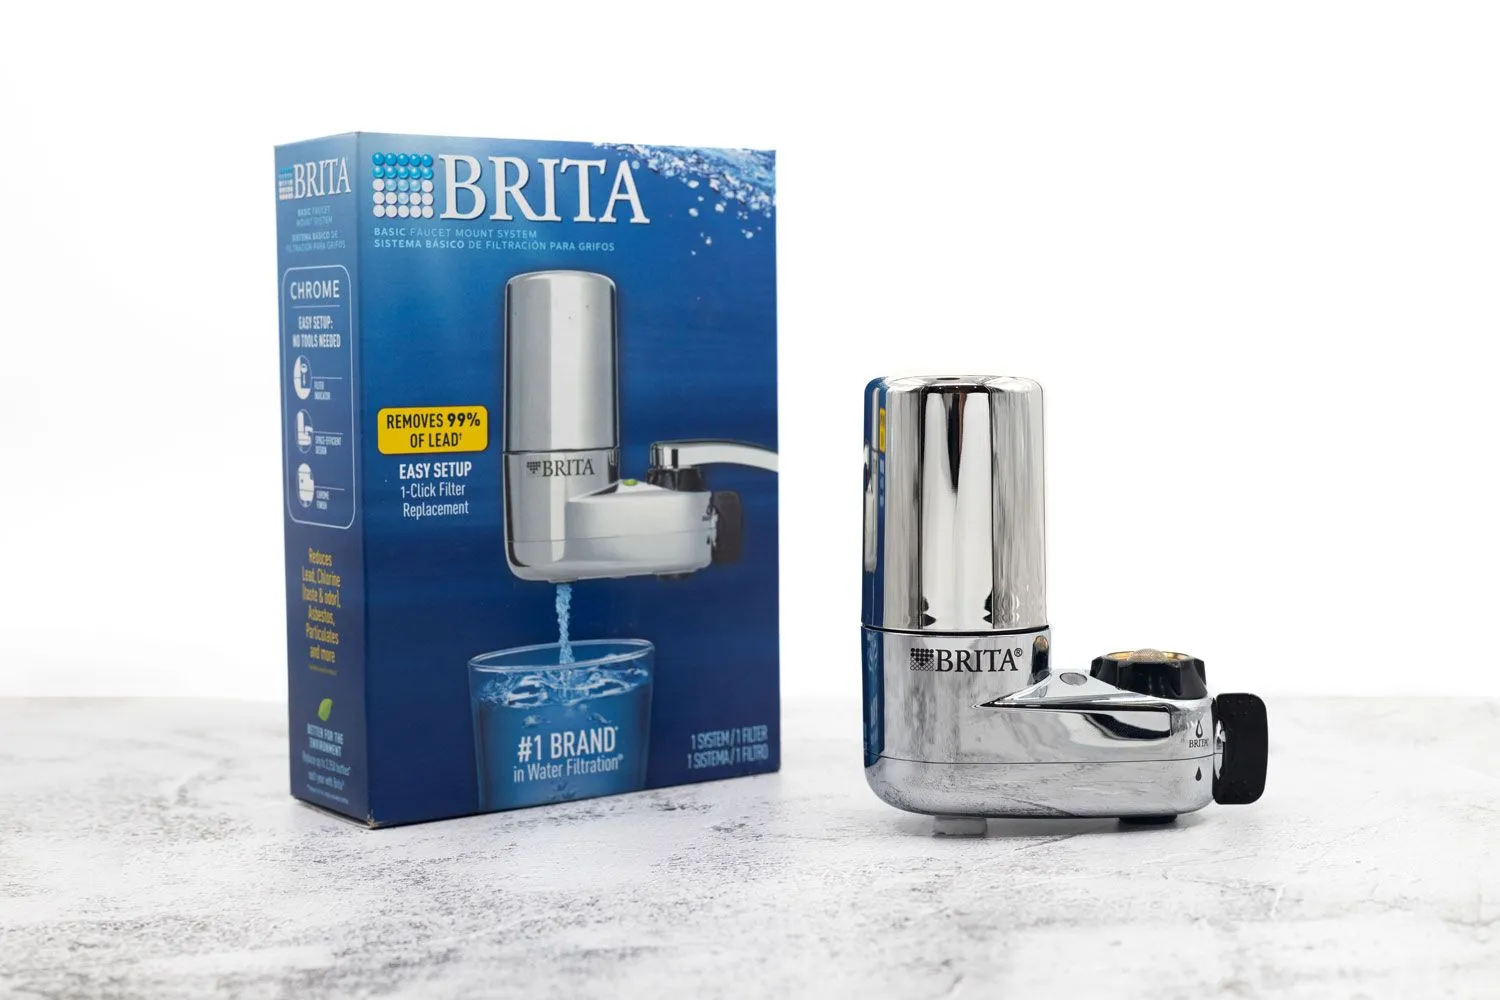 Brita Faucet Mount System with Filter Change Reminder